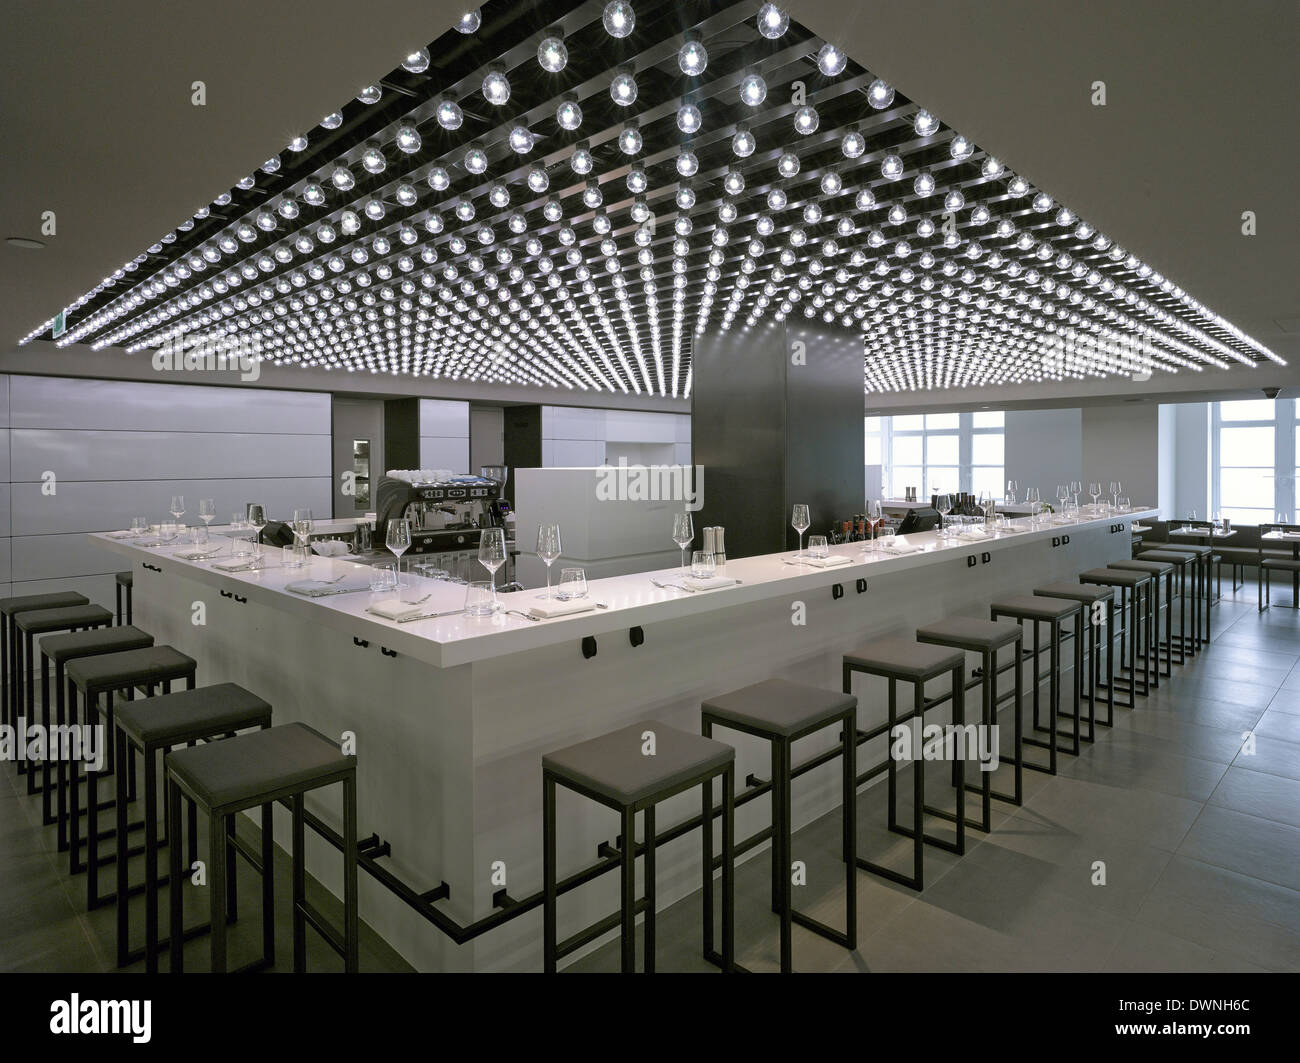 The Fashion lab at Harrods, London, United Kingdom. Architect: Found Associates, 2013. Interior view in Salad kitchen restaurant Stock Photo